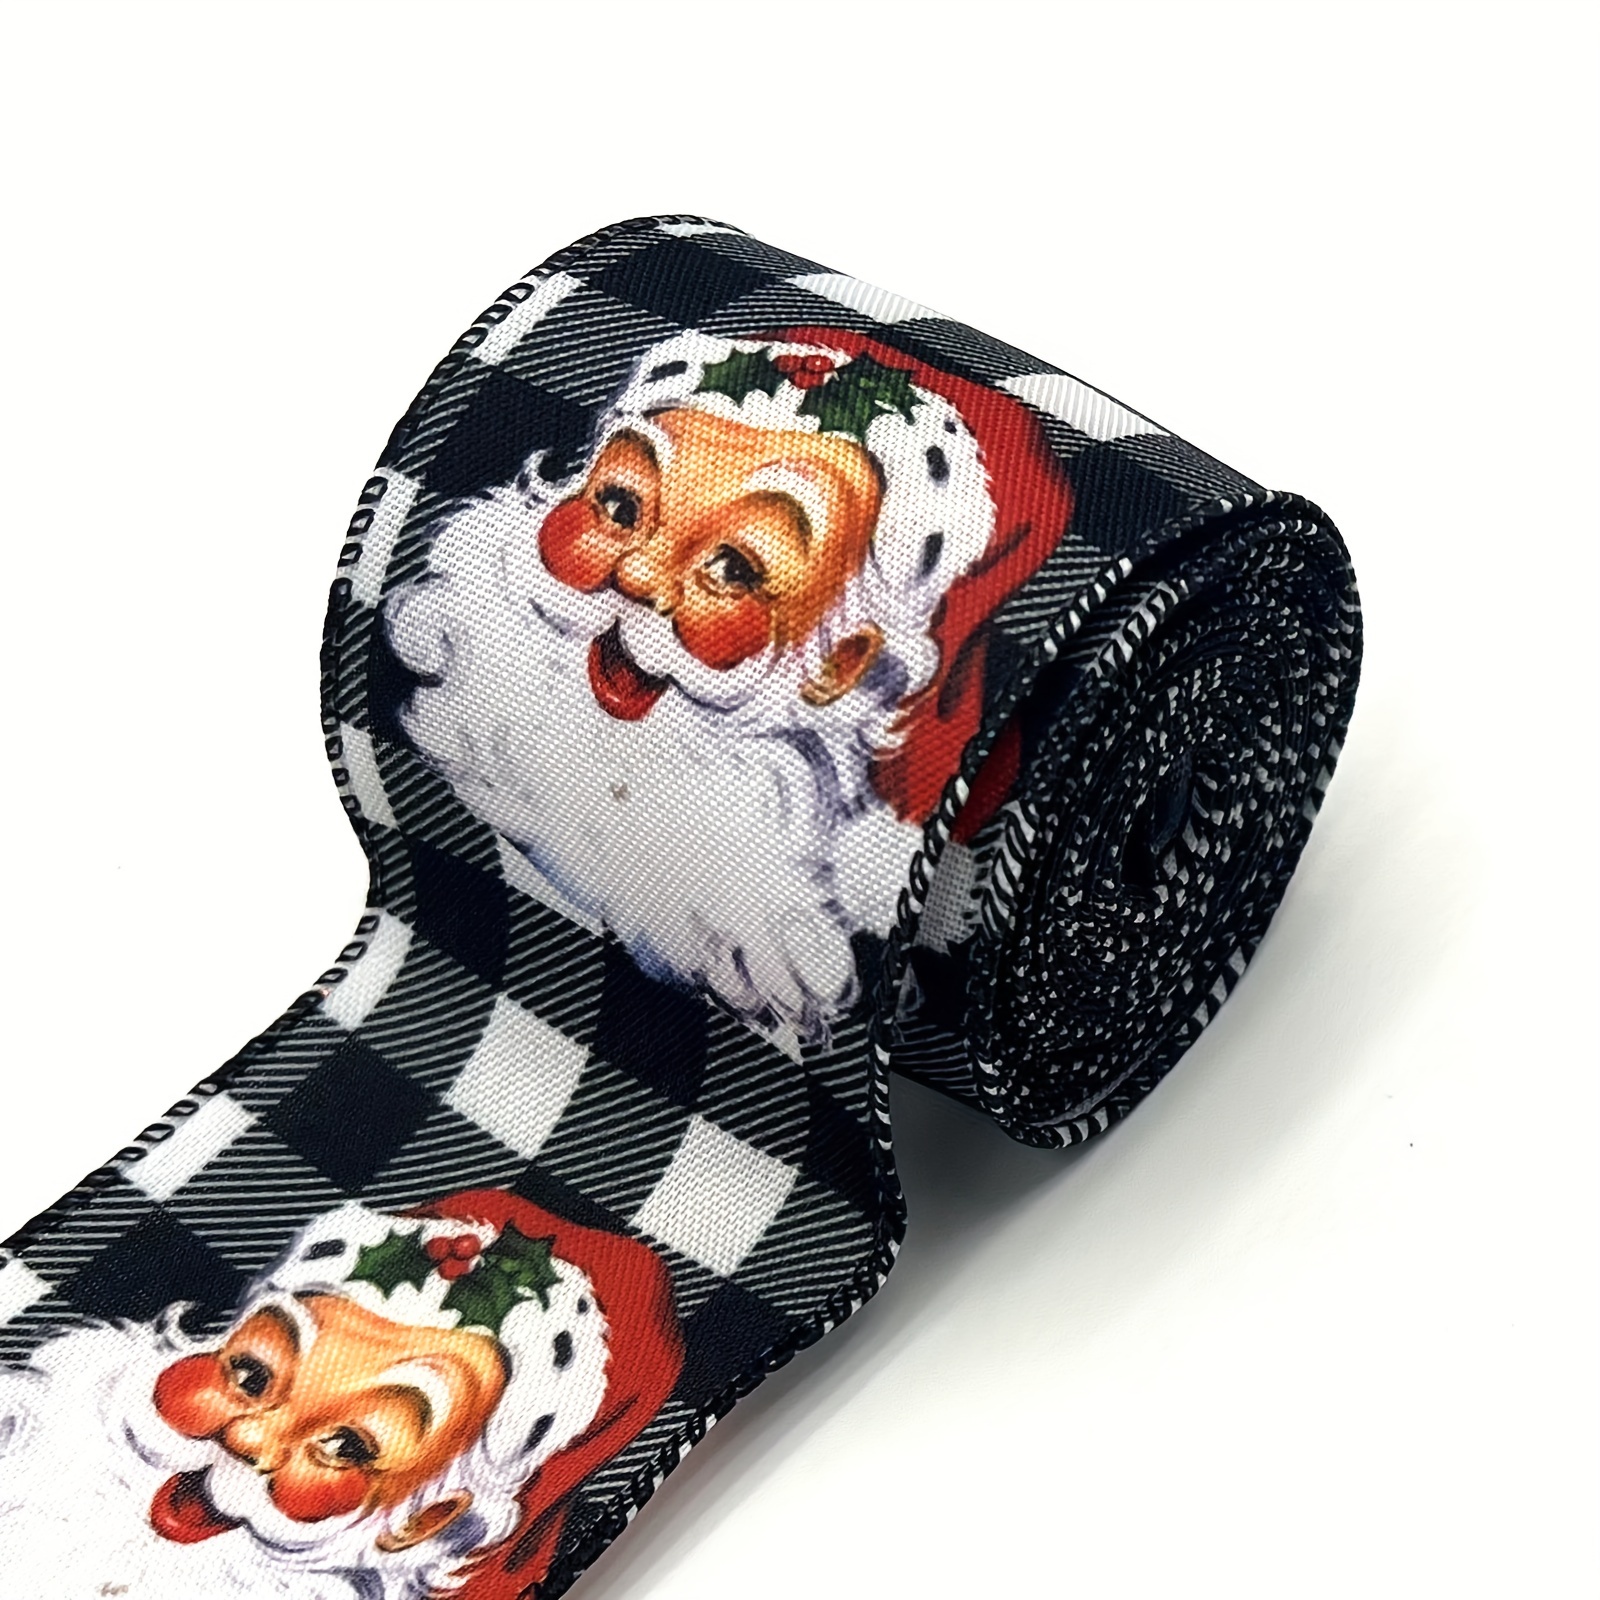 Bow Cap Accessories, Gift Ribbons Wrap, Christmas Ribbon